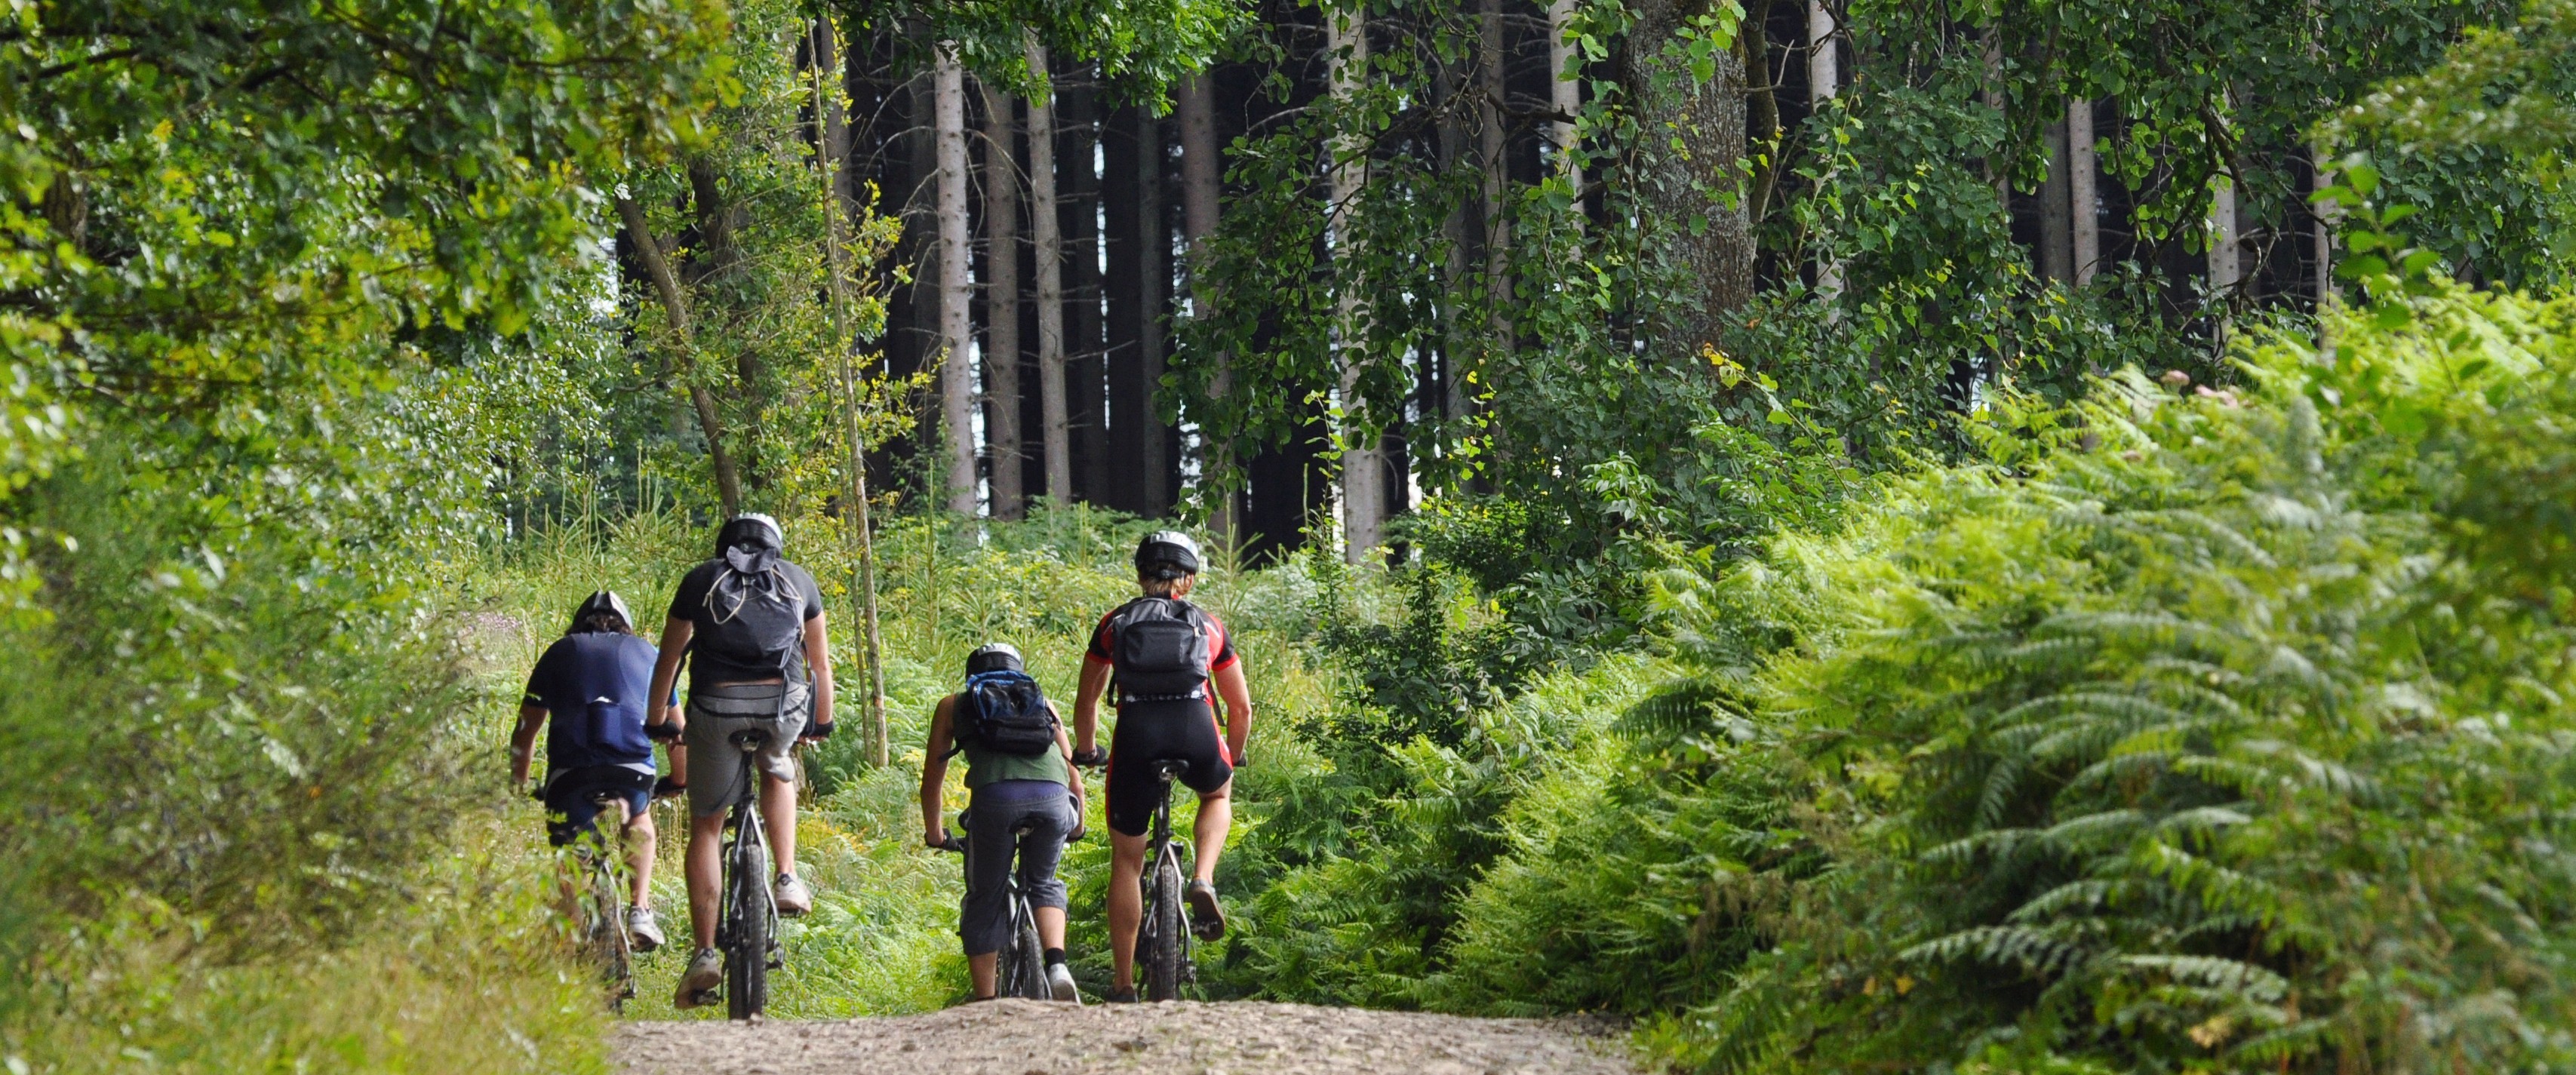 Group biking on gravel trail through park forest